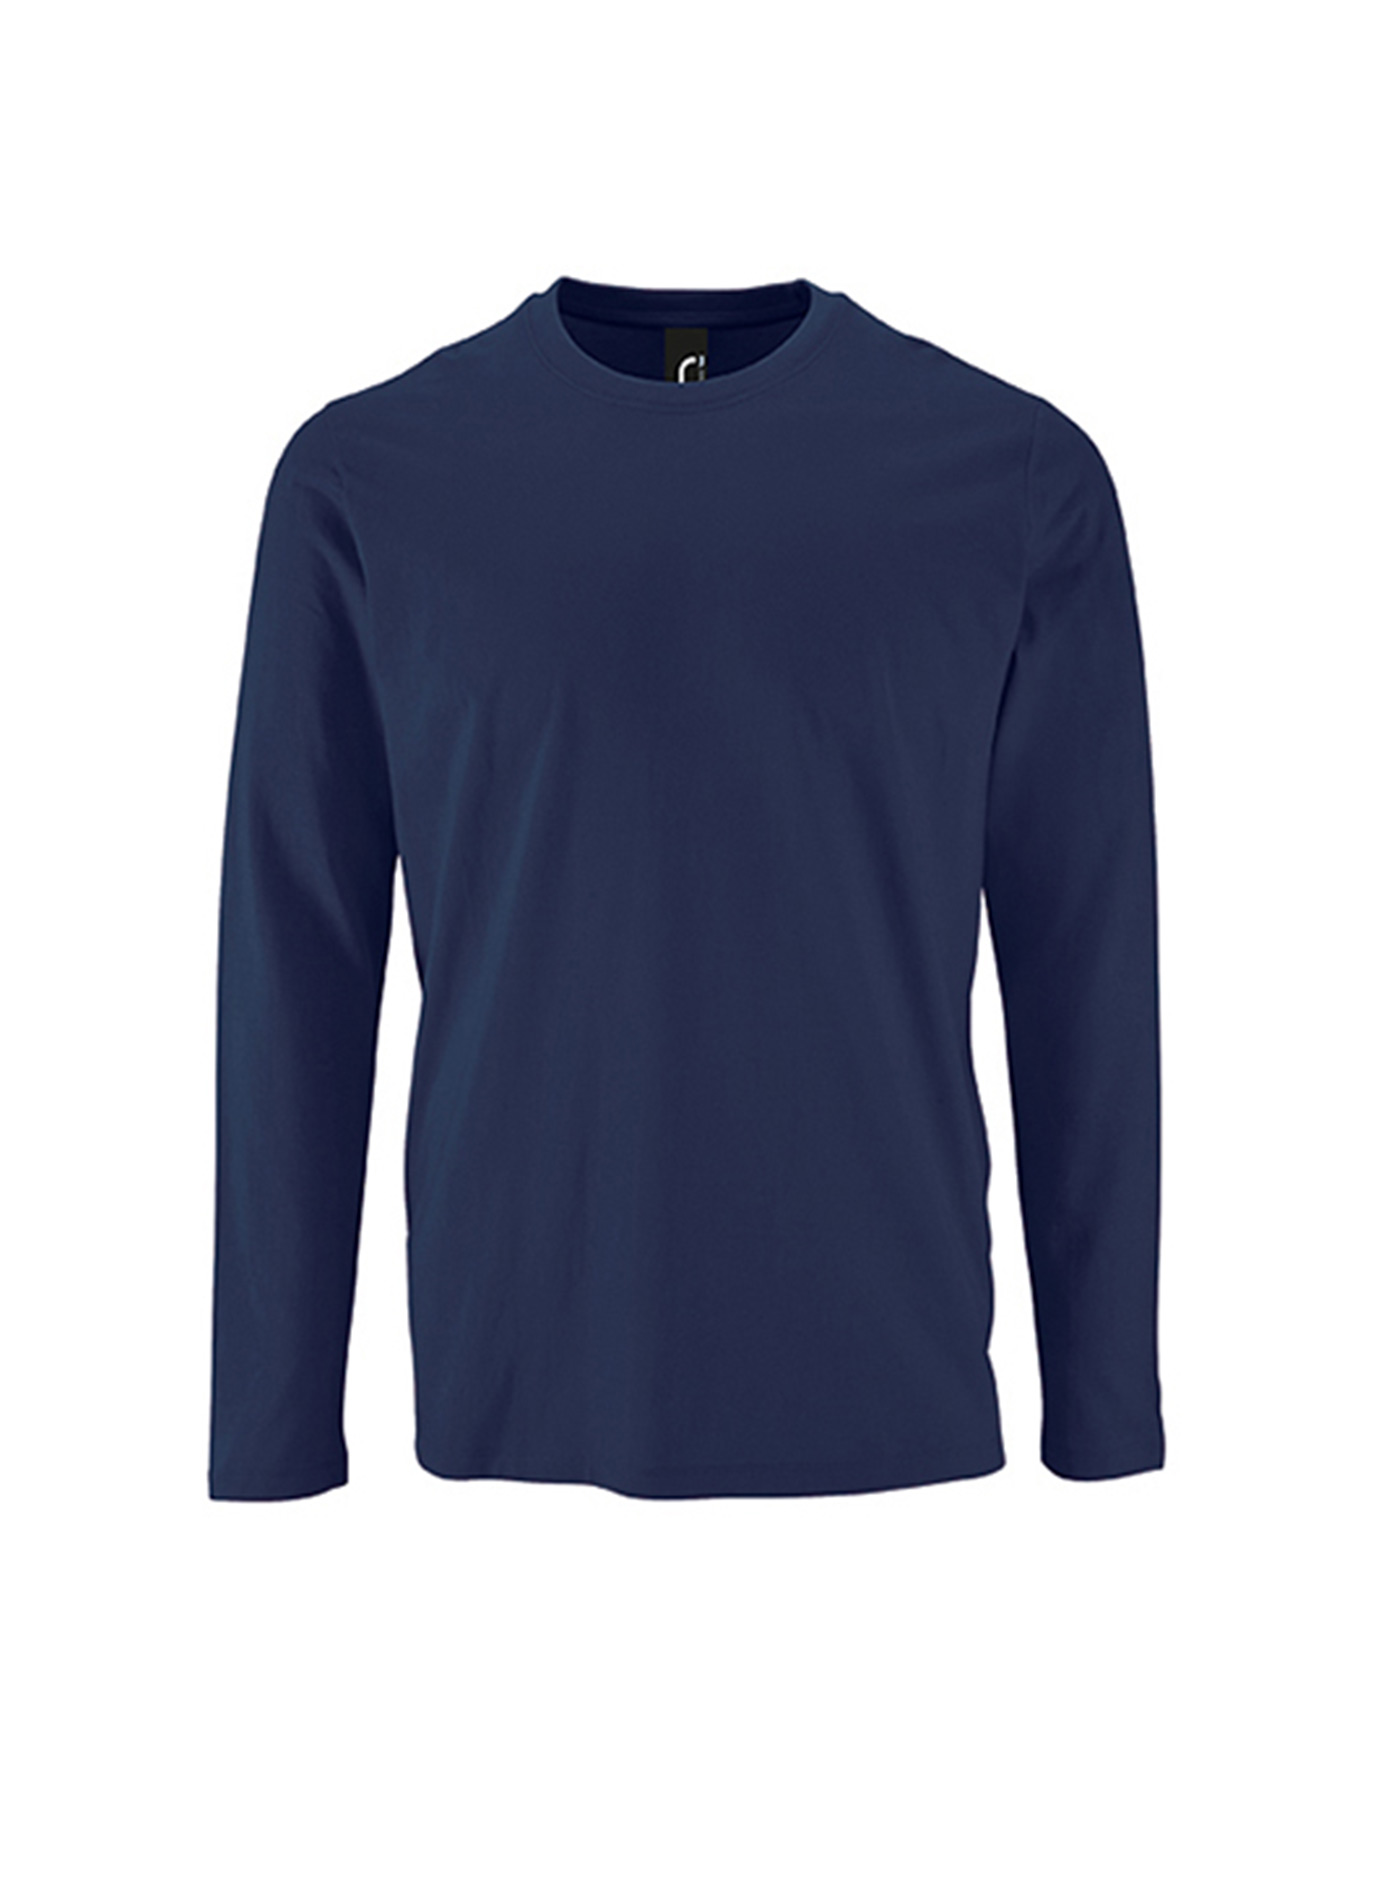 Pánské tričko s dlouhým rukávem SOL´S Imperial - Námořnická modrá XL